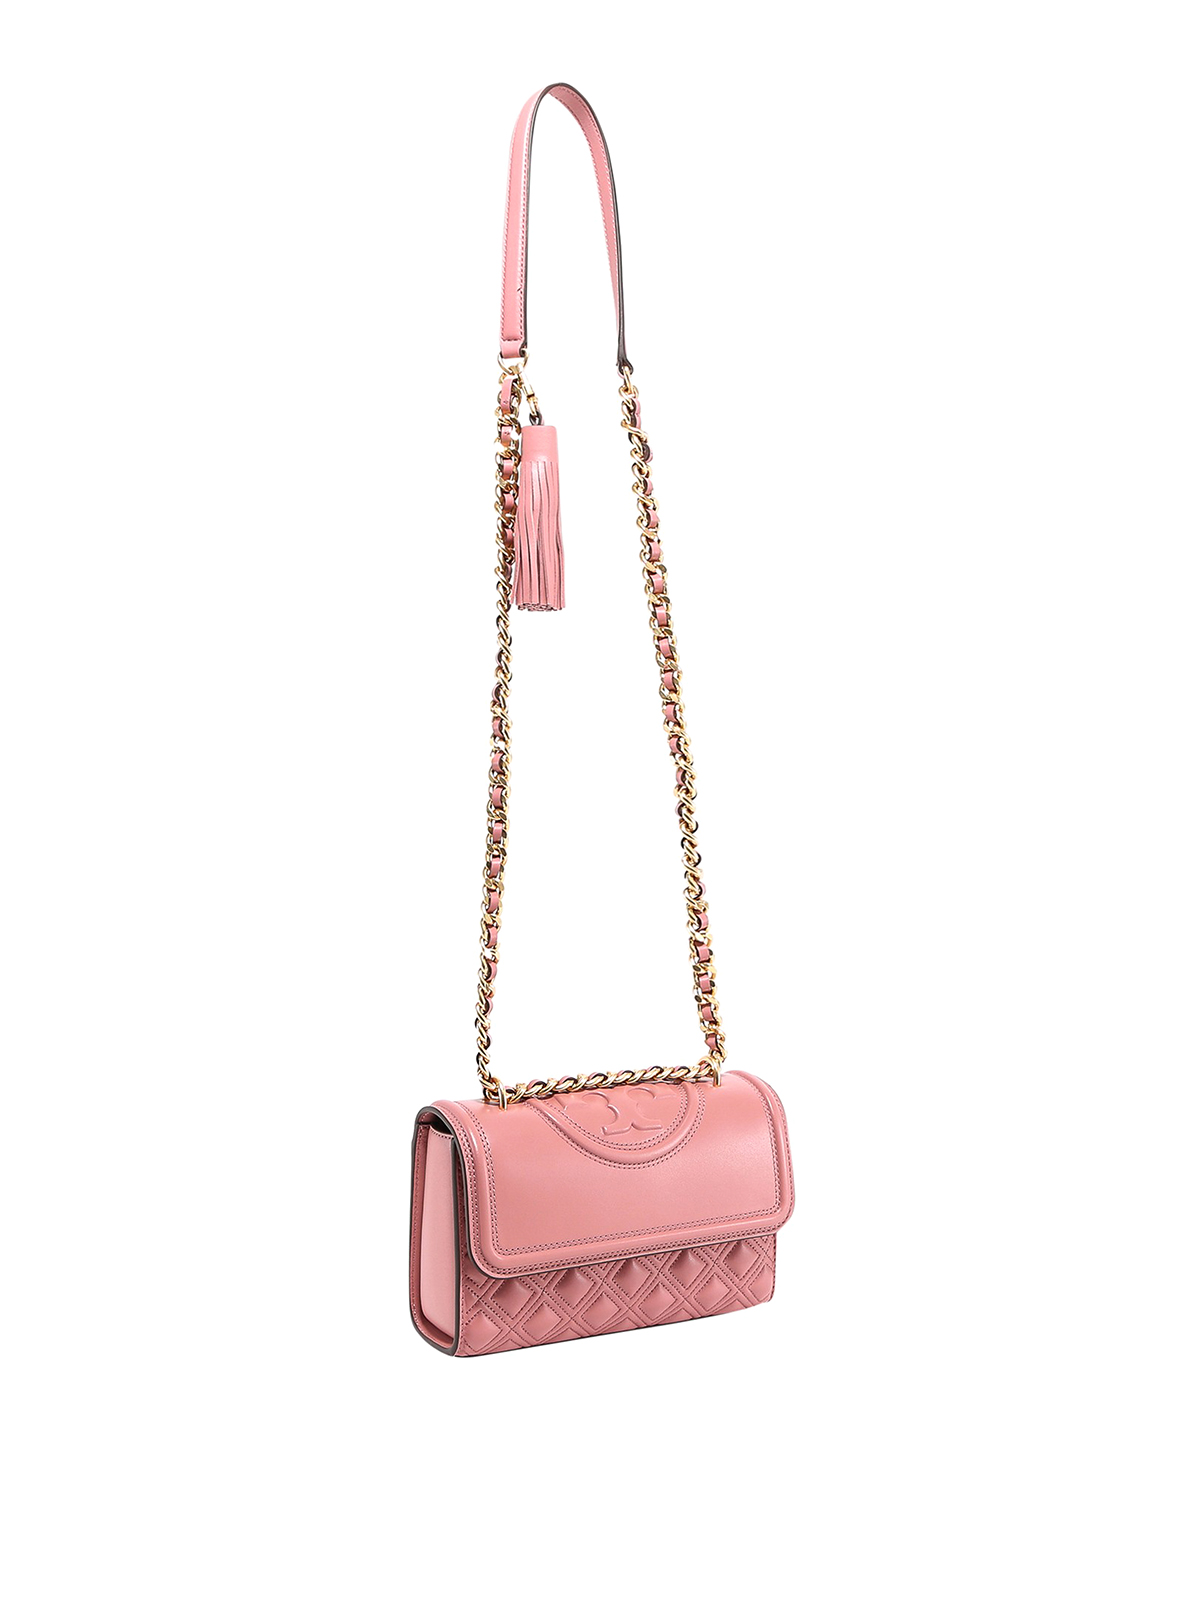 Tory Burch Fleming Crossbody Rose Pink Metallic Leather Gold Tassel Bag